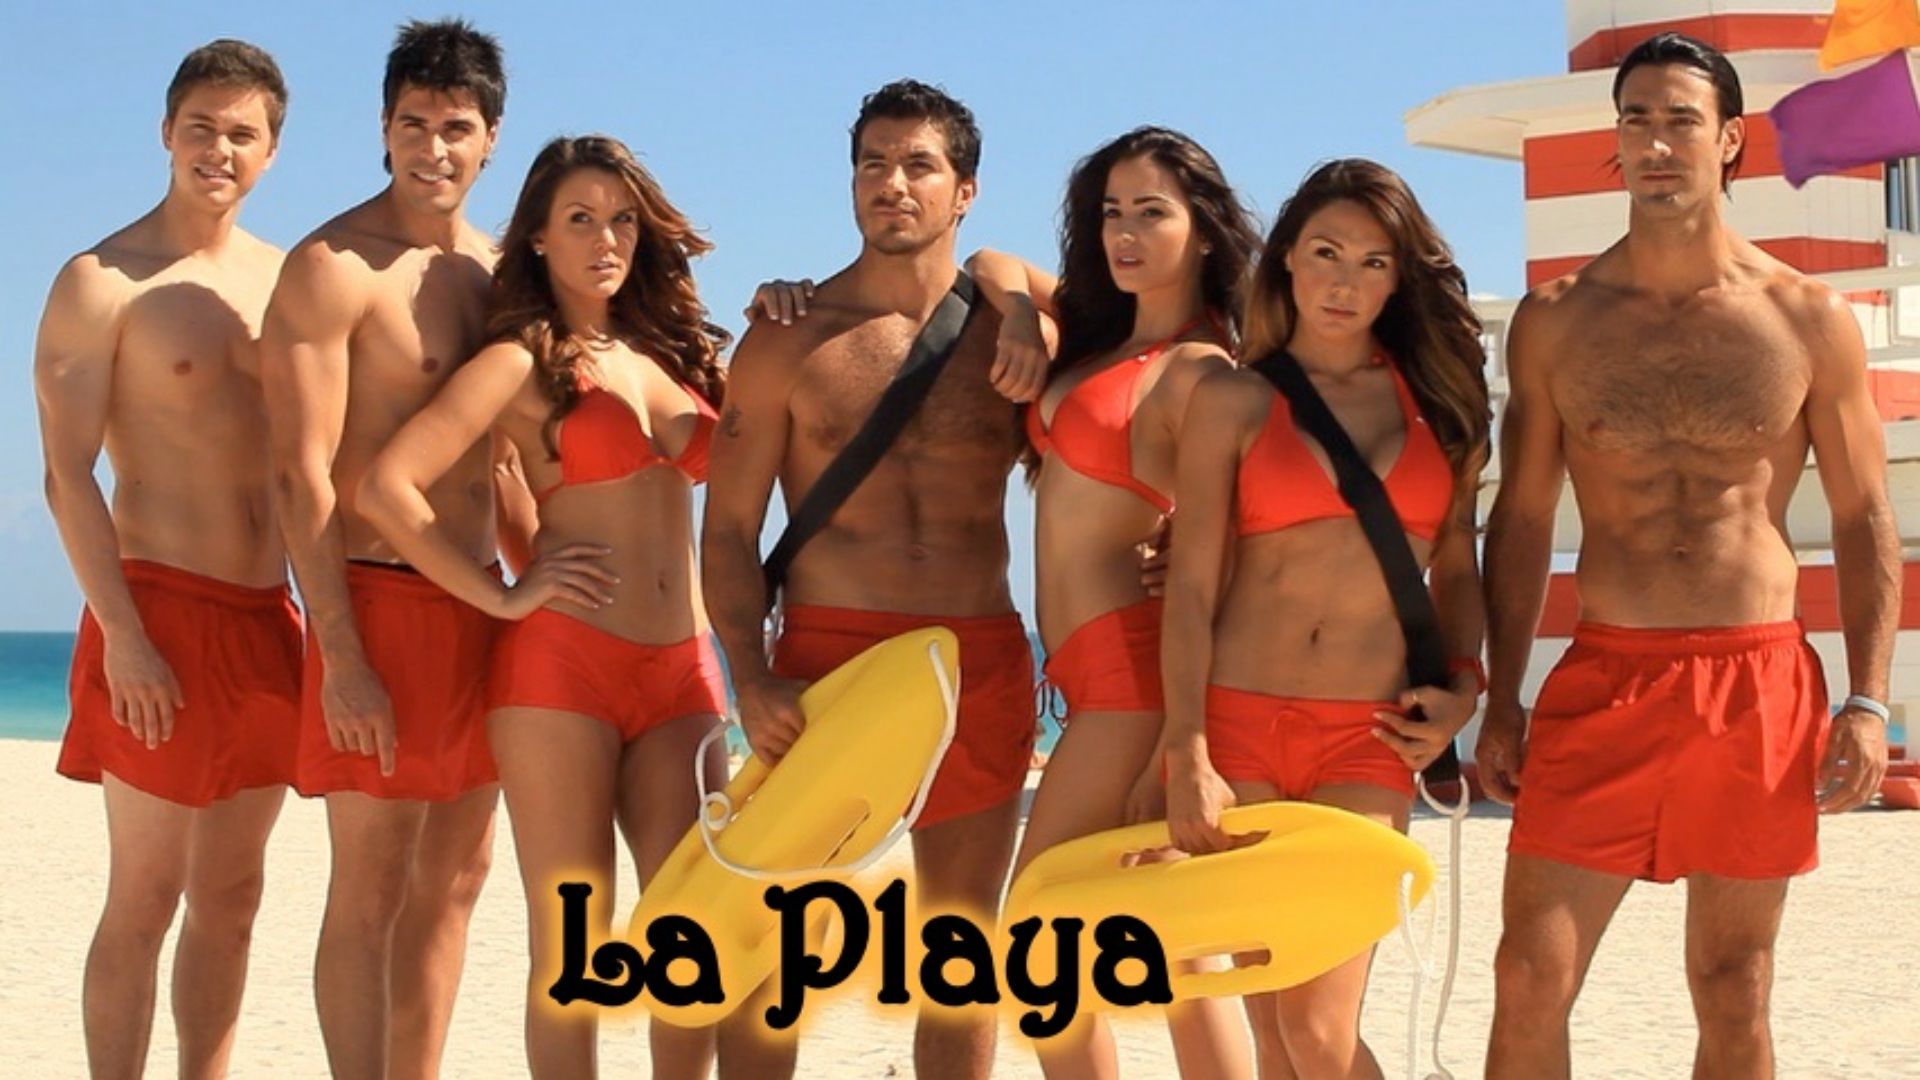 La Playa Trailer